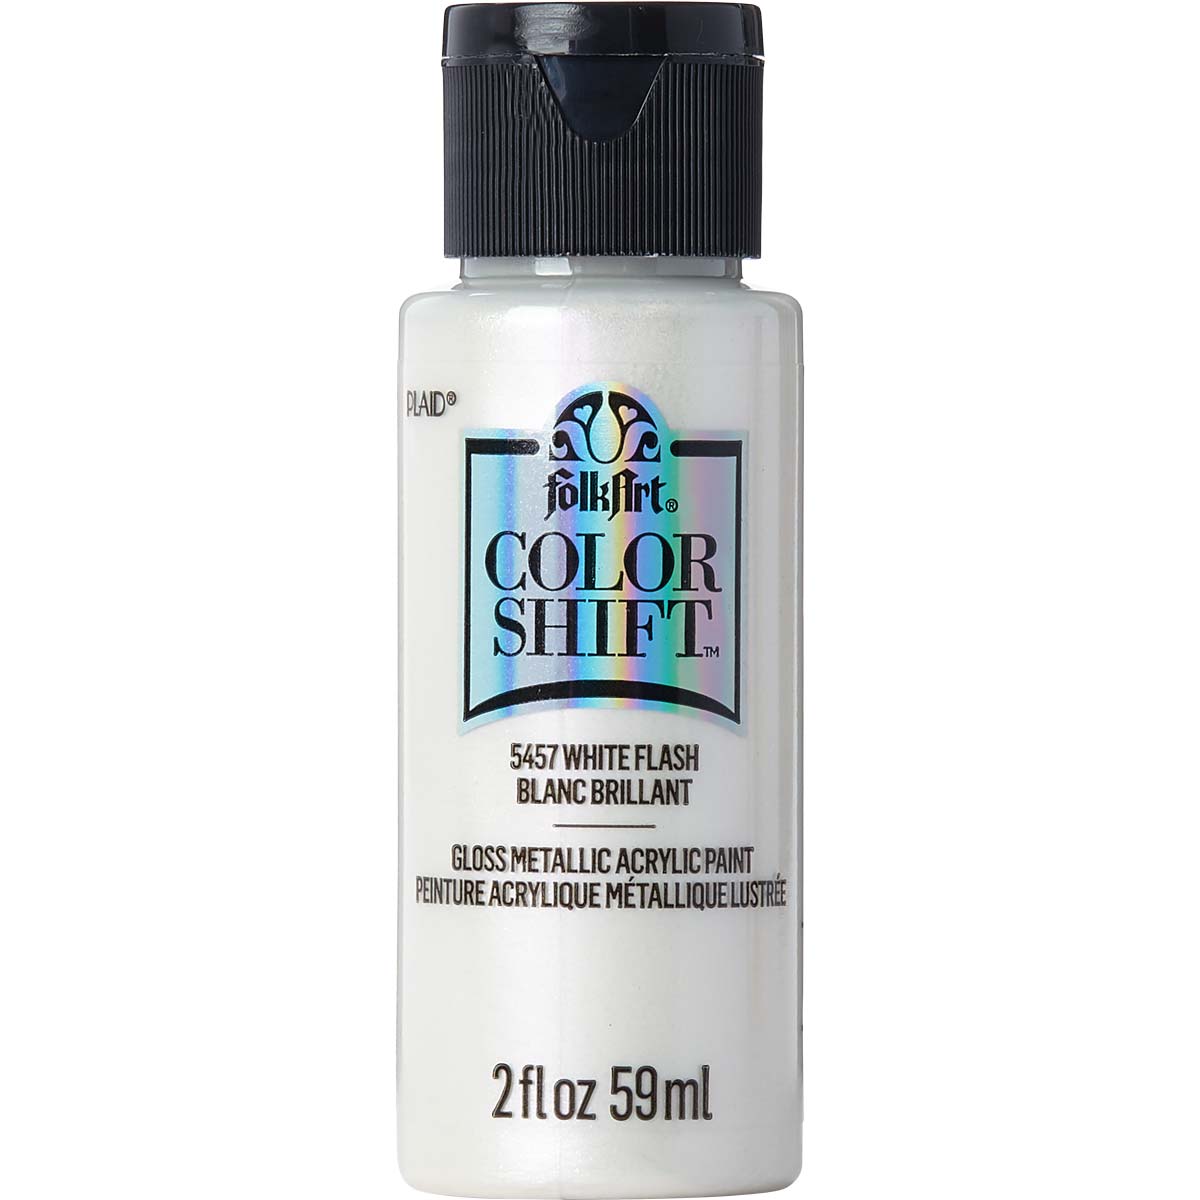 Color Shift Metallic Gloss Finish FolkArt Acrylic Paint